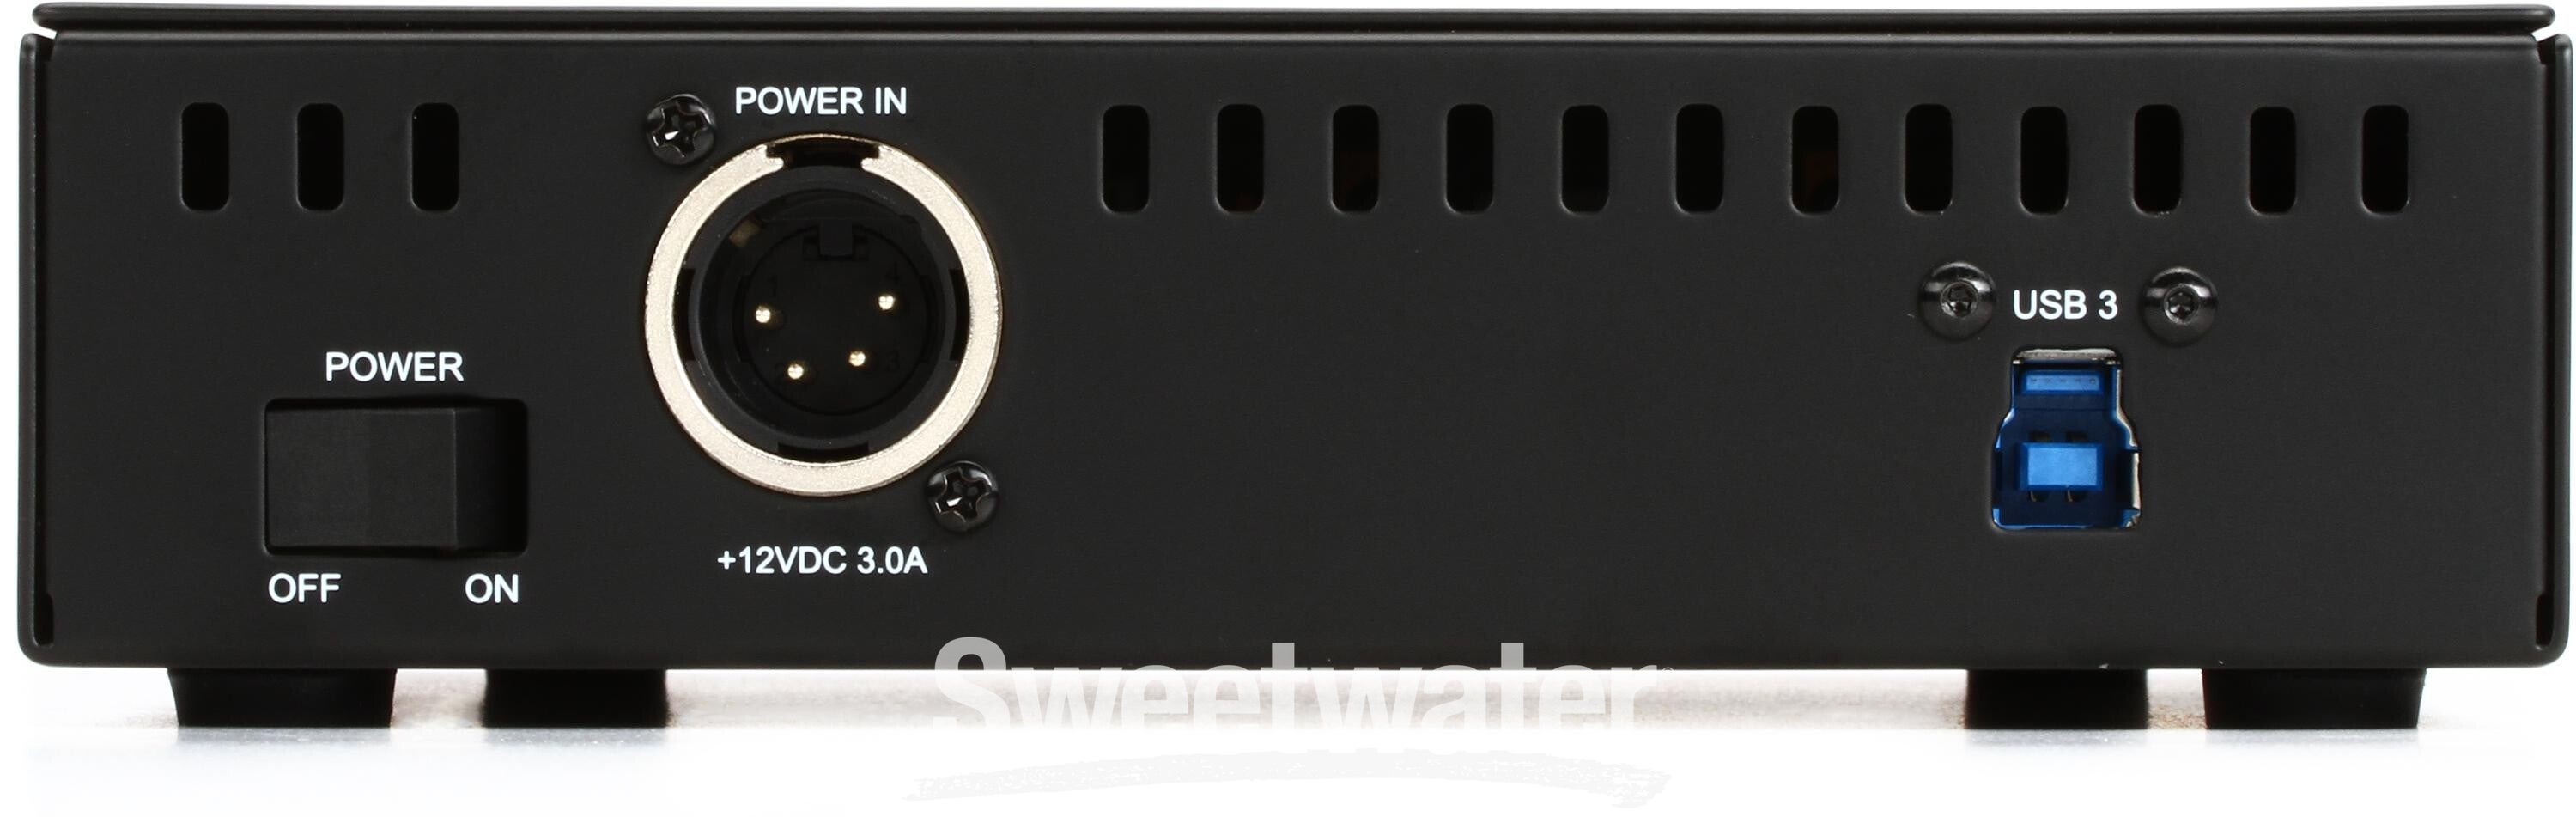 Universal Audio UAD-2 Satellite USB OCTO Core | Sweetwater